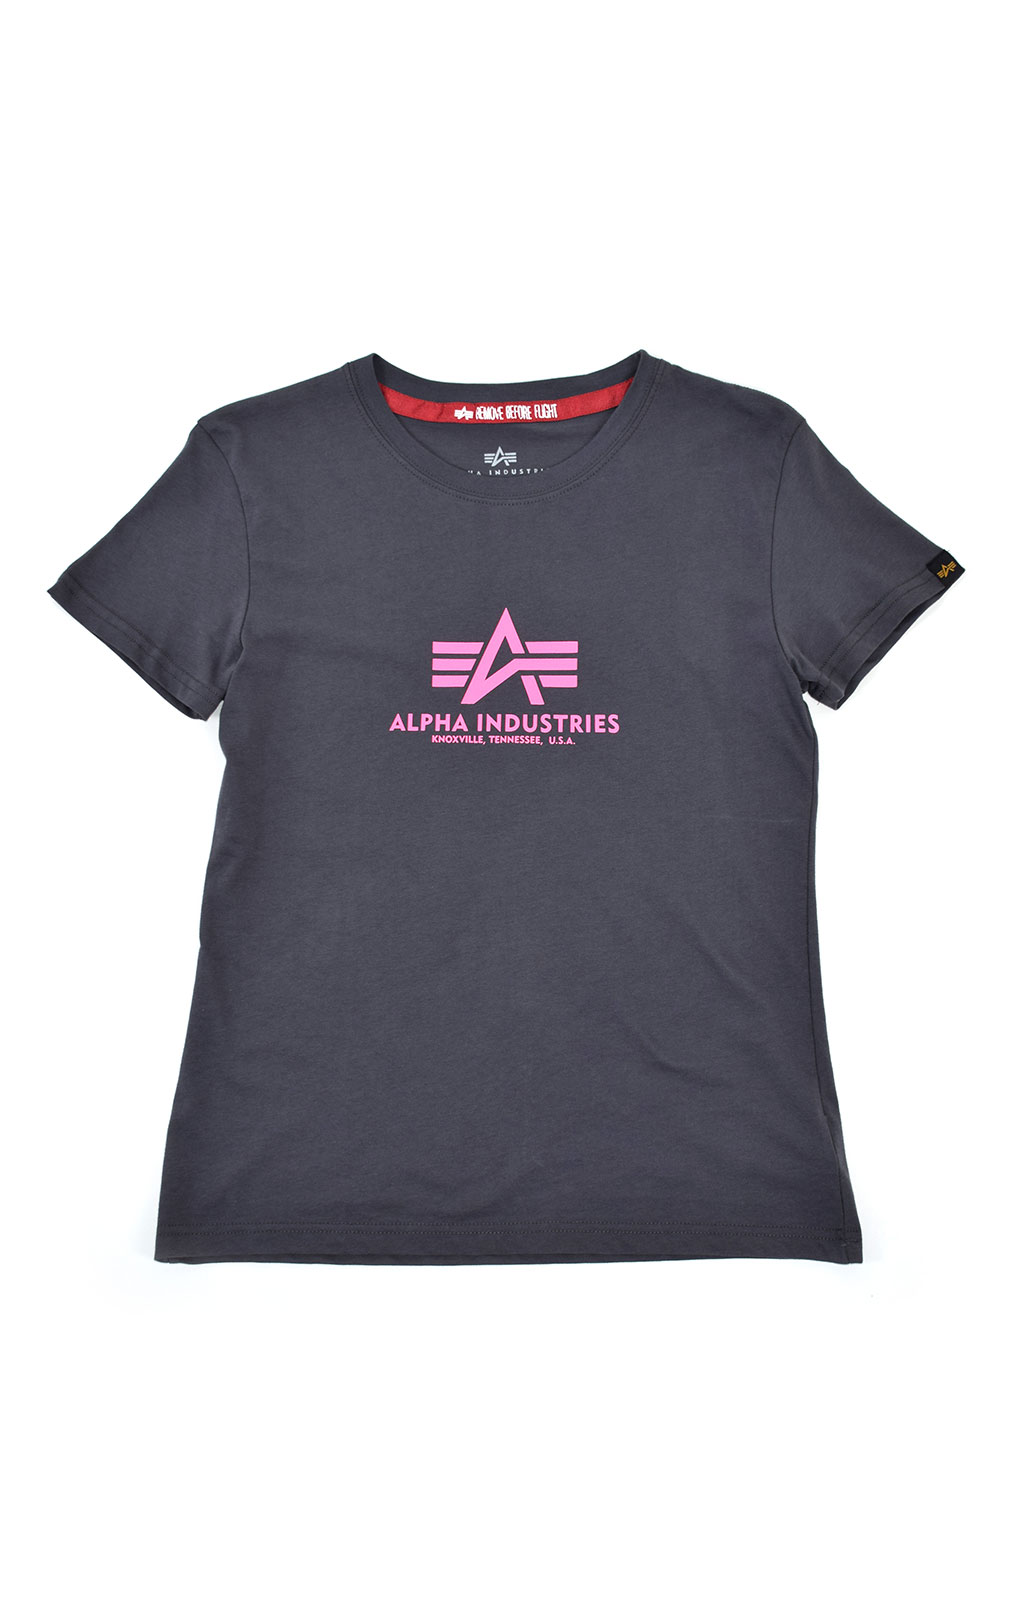 Женская футболка ALPHA INDUSTRIES NEW BASIC T grey black/neon pink 